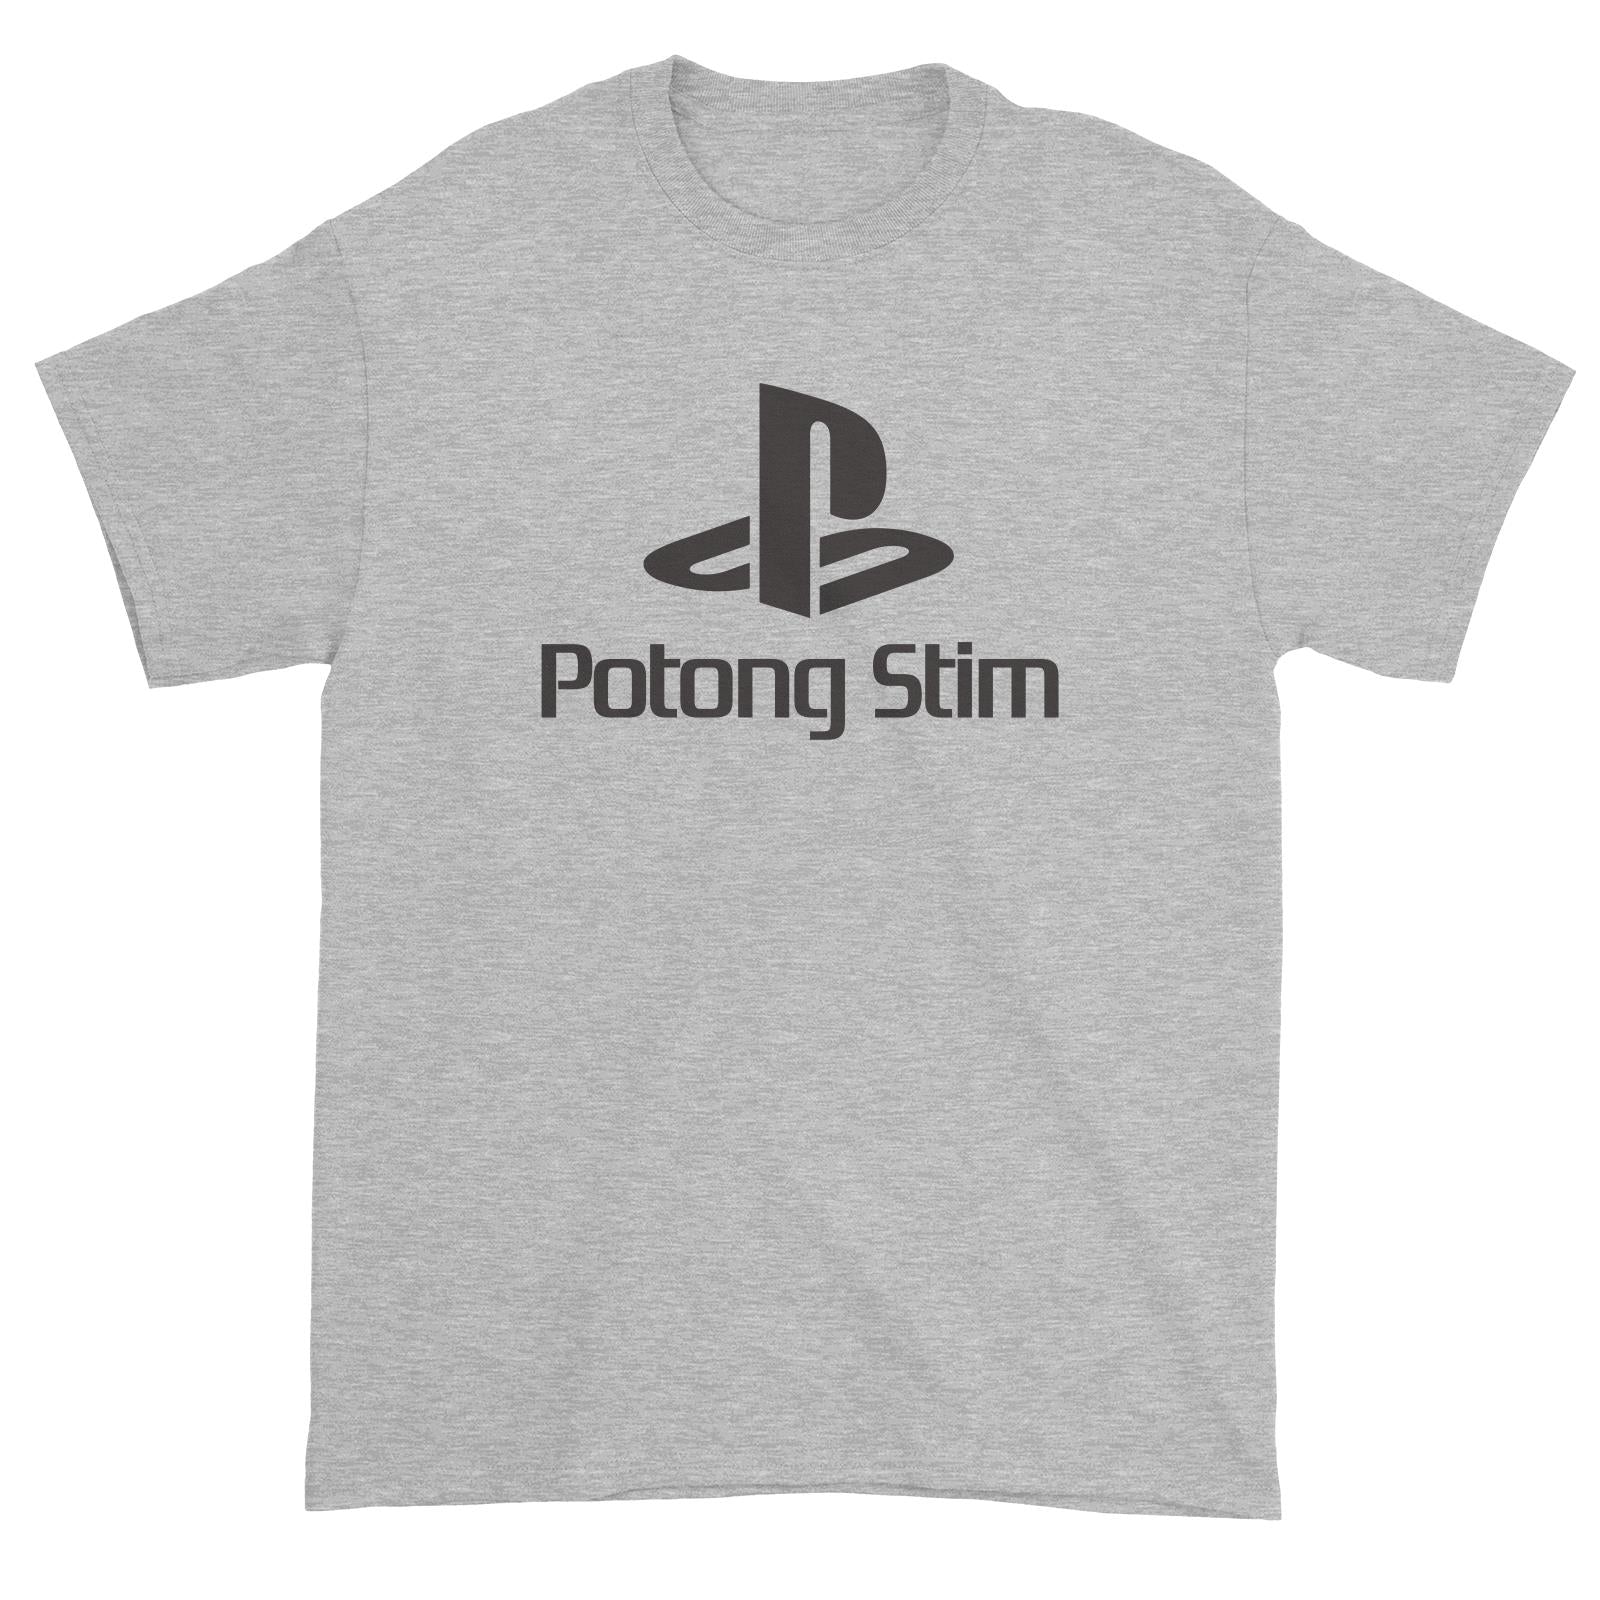 Slang Statement Potong Stim Unisex T-Shirt